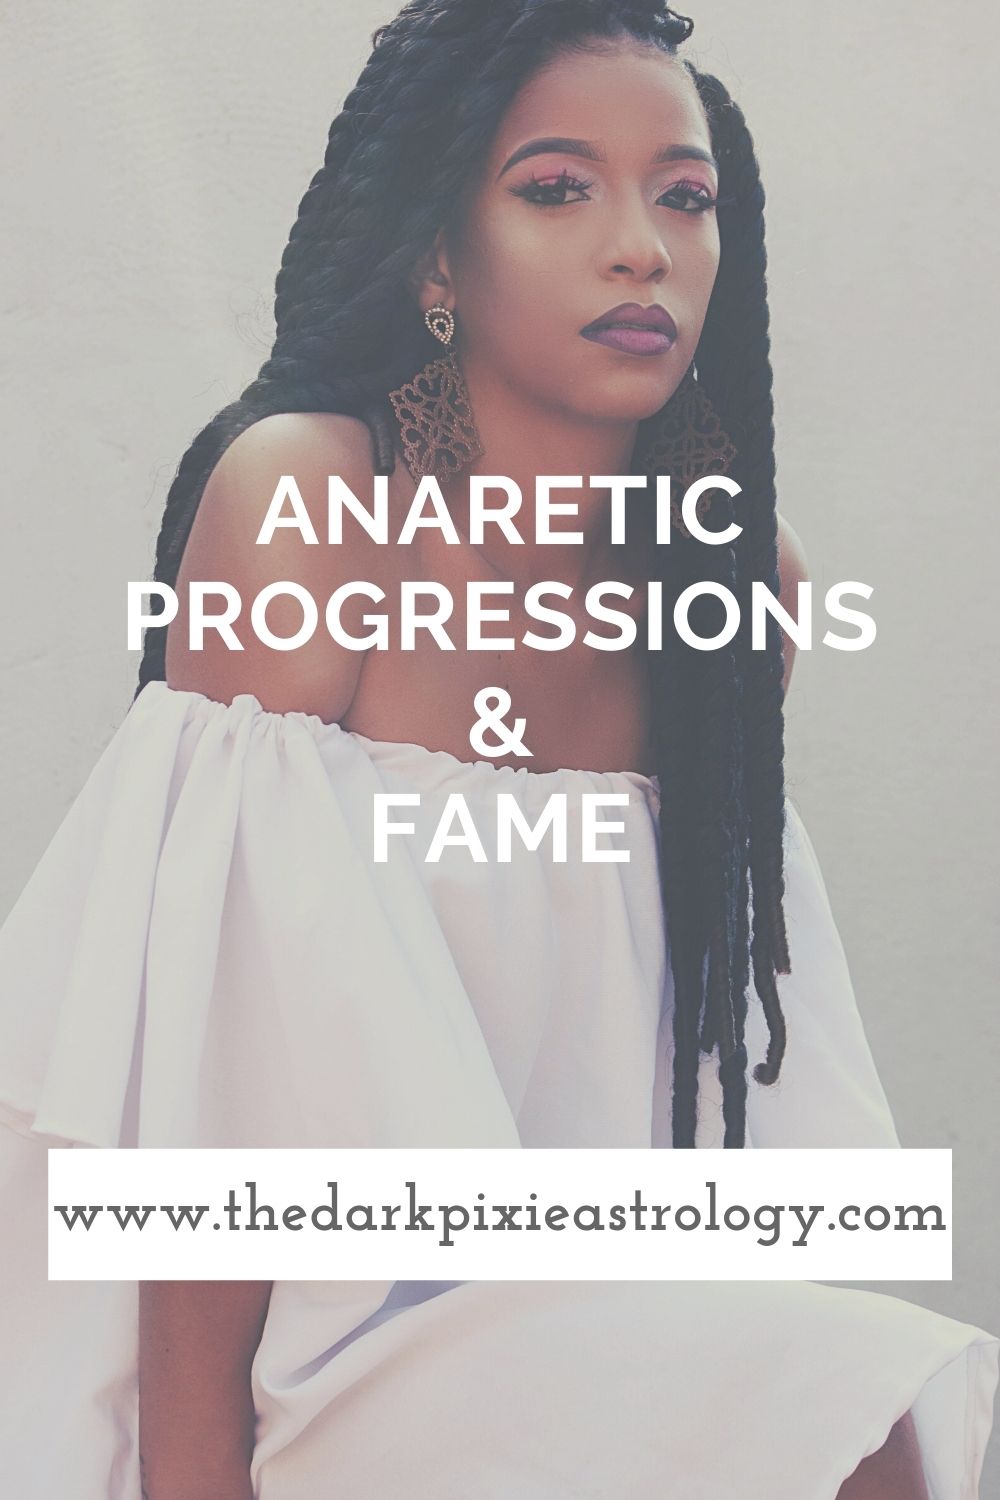 Anaretic Progressions & Fame - The Dark Pixie Astrology